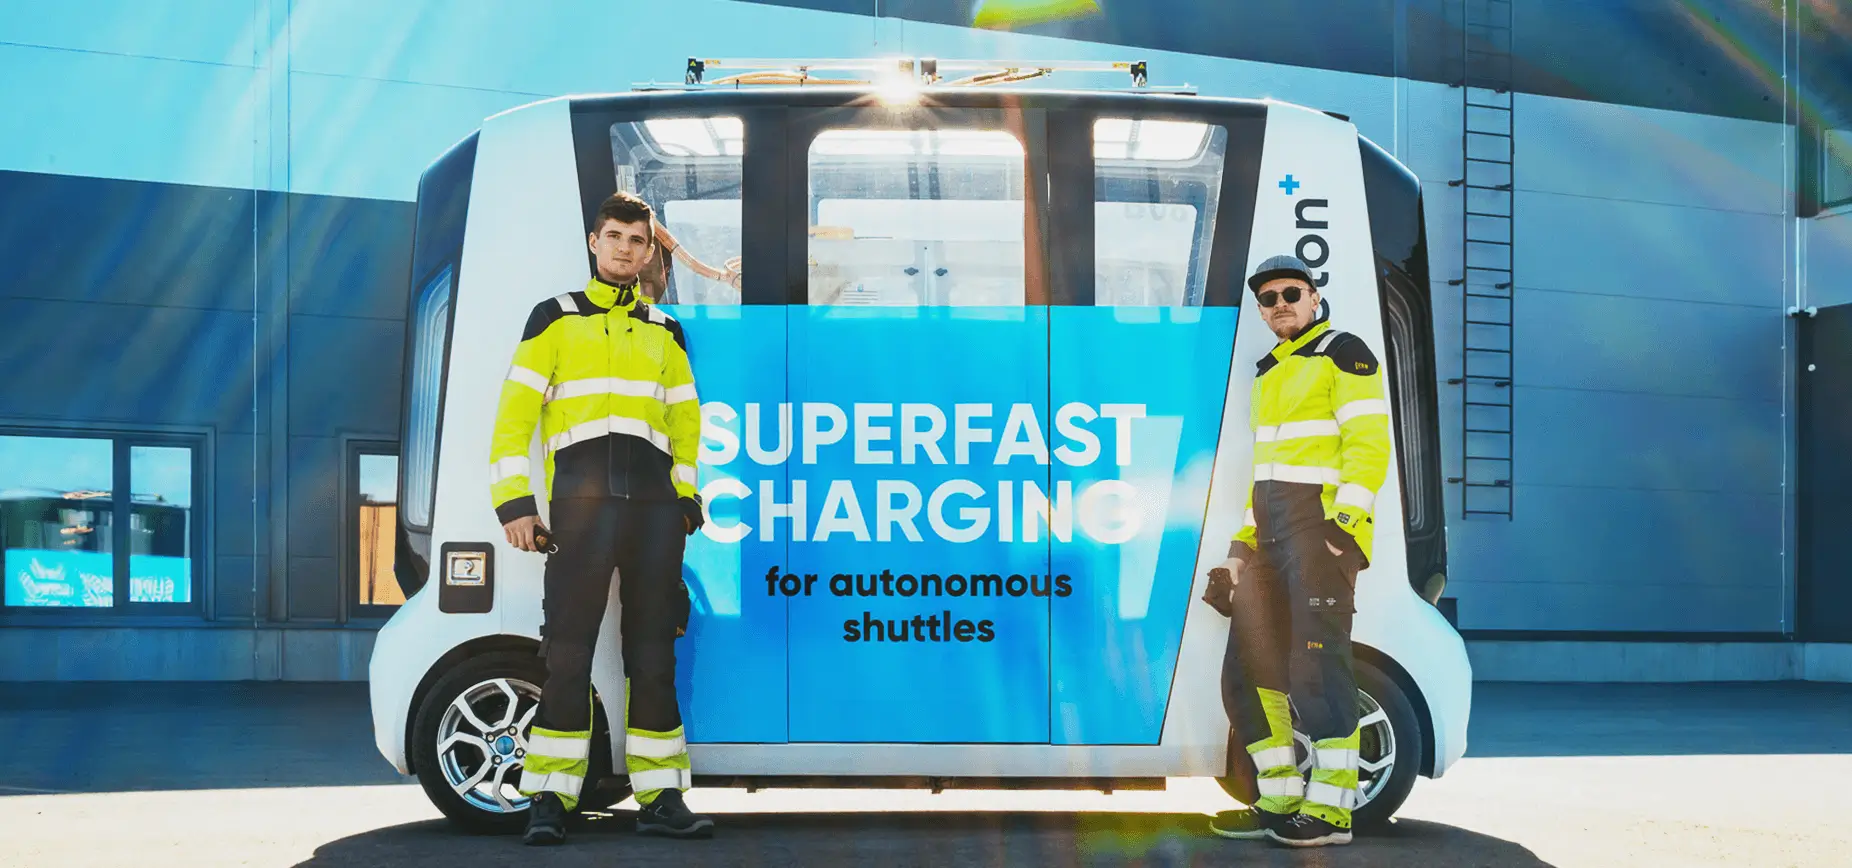 Superfast charging for autonomous shuttles